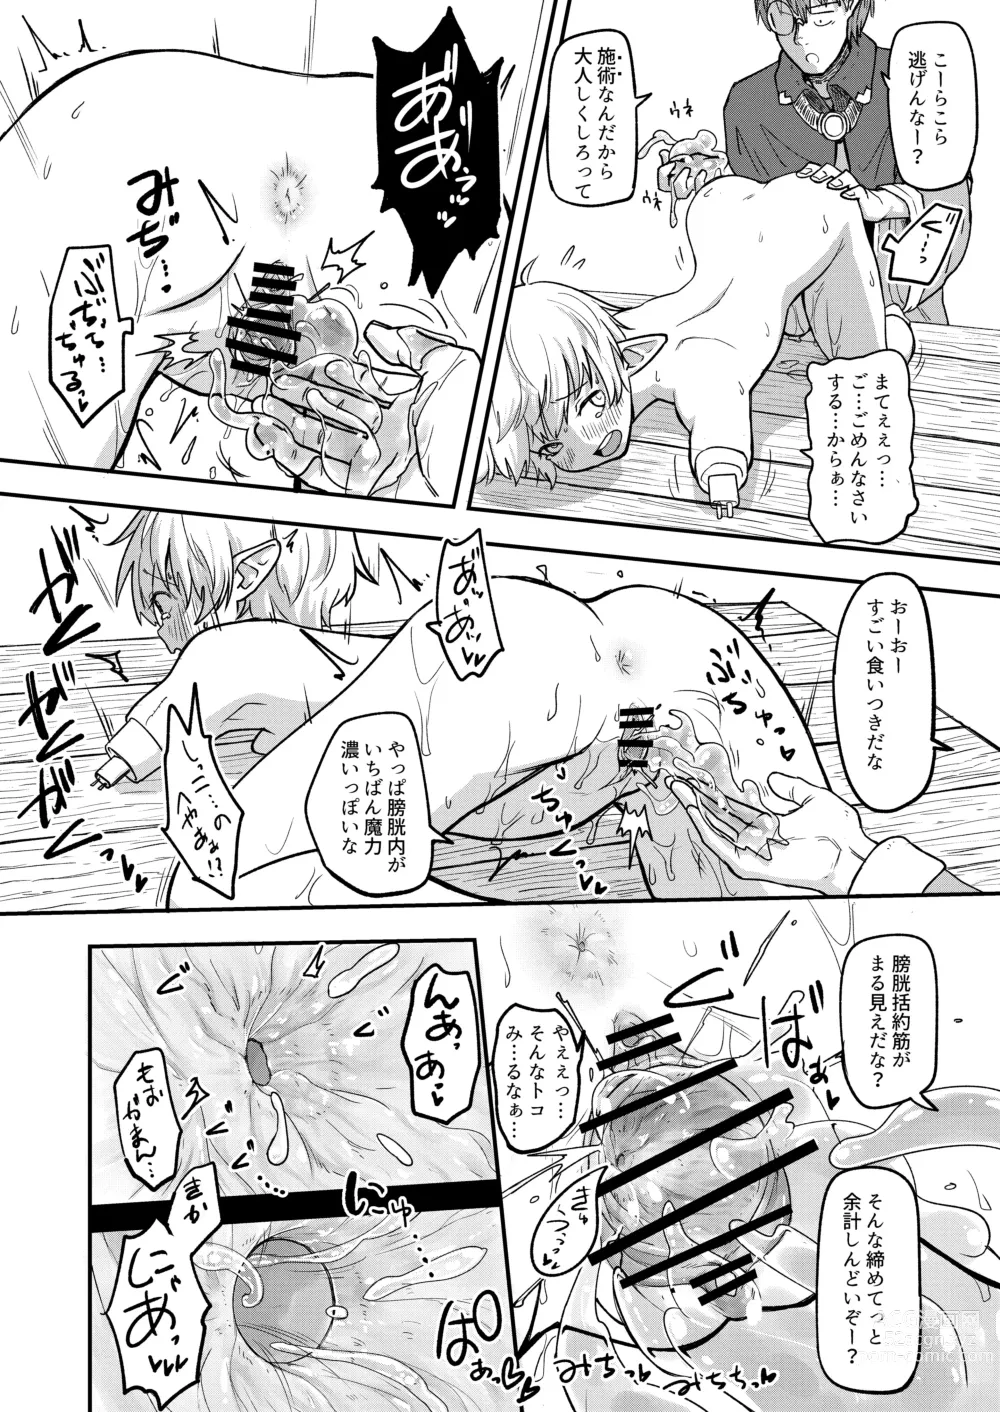 Page 12 of doujinshi Mecha Ude Shoujo Toffee-san vs Endless Slime Nyoui